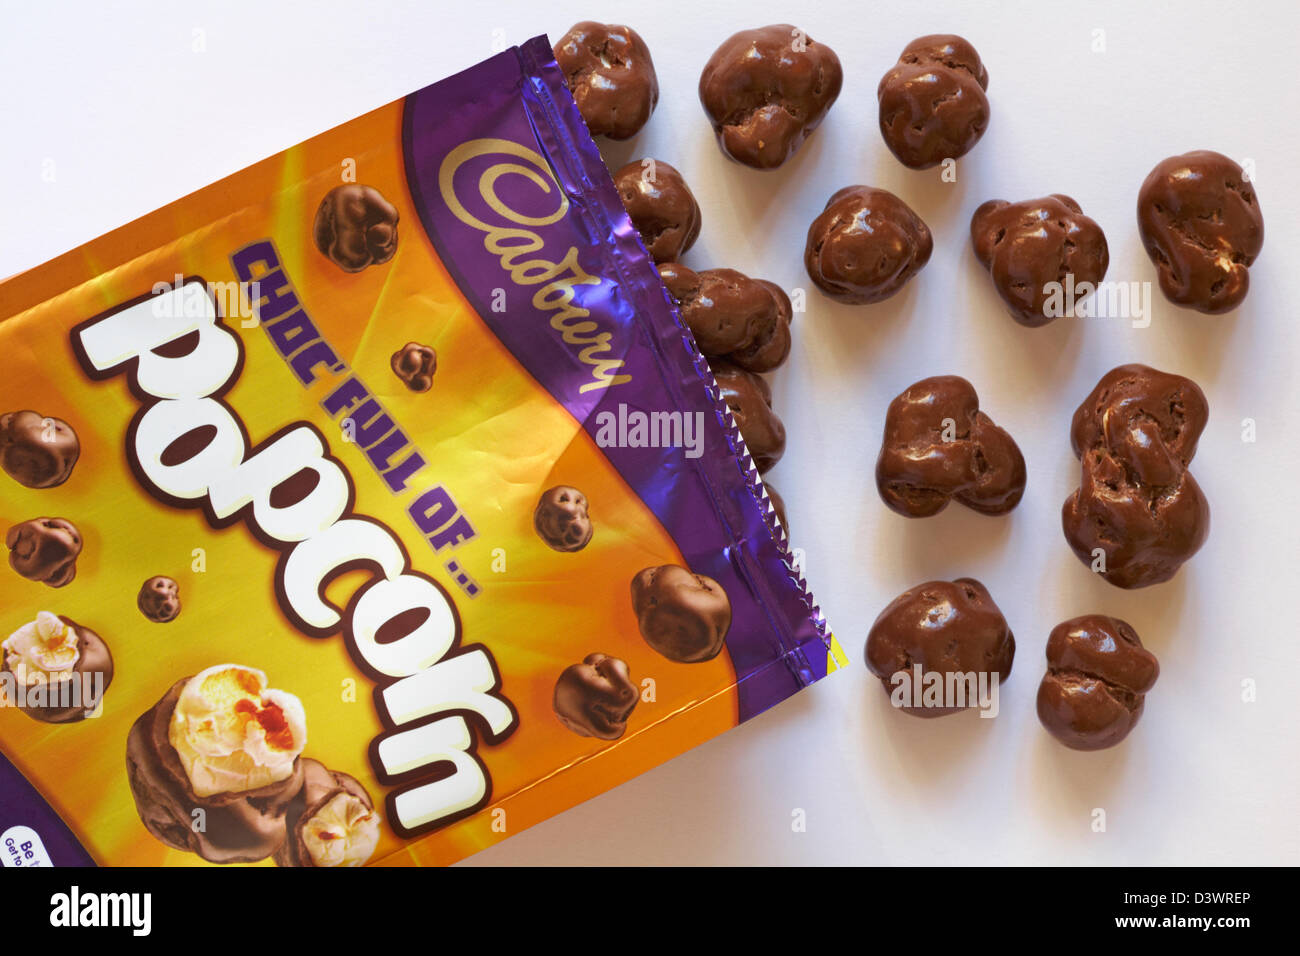 Bag of Cadbury choc full of popcorn opened with contents spilled set on white background Stock Photo